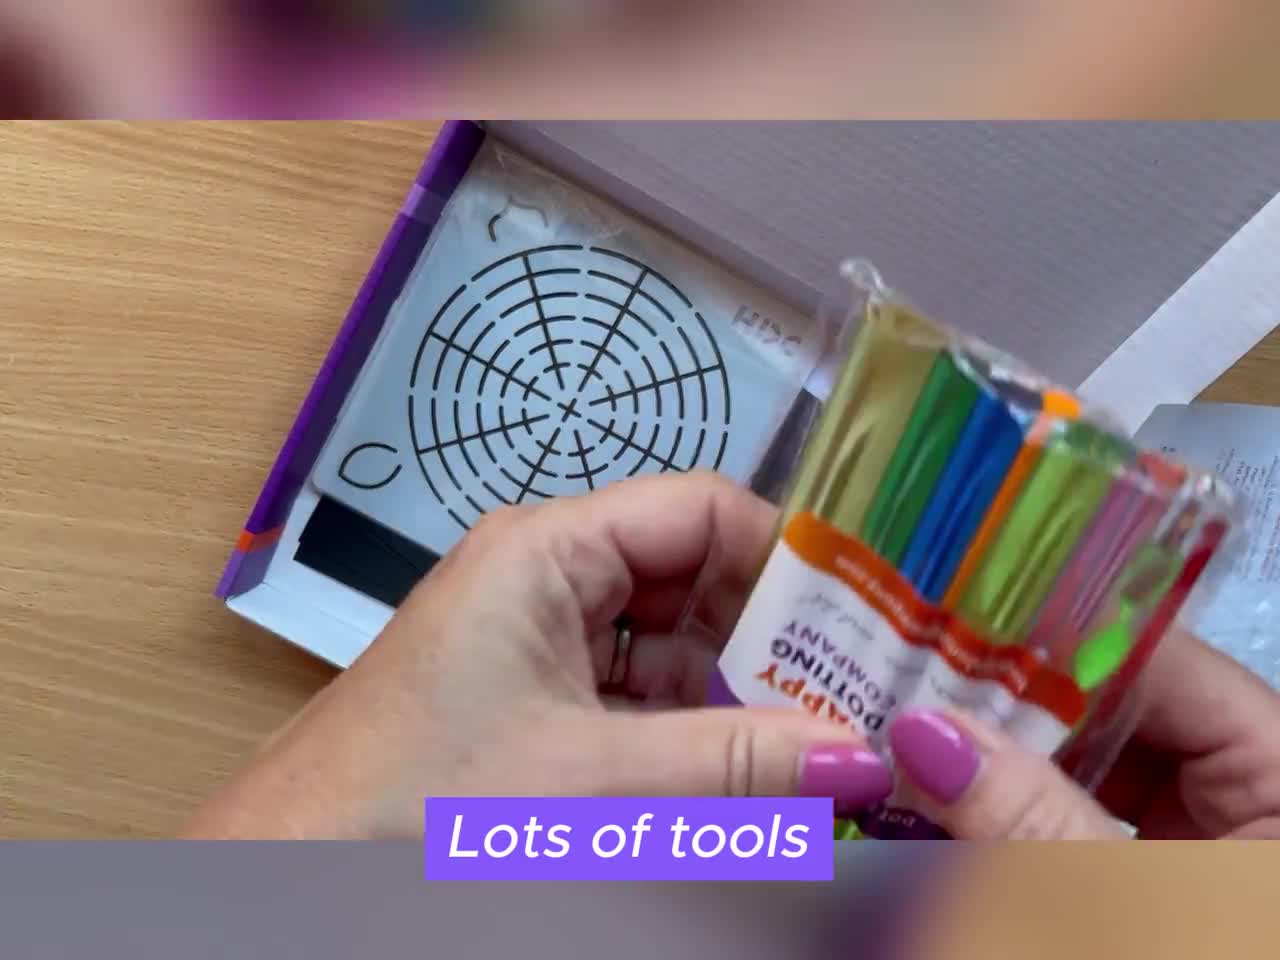 Dotting Tools for Painting Mandalas Happy Dotting Company With Tools  Holder, for Mandala Dot Art Stylus Ellipse Tool 